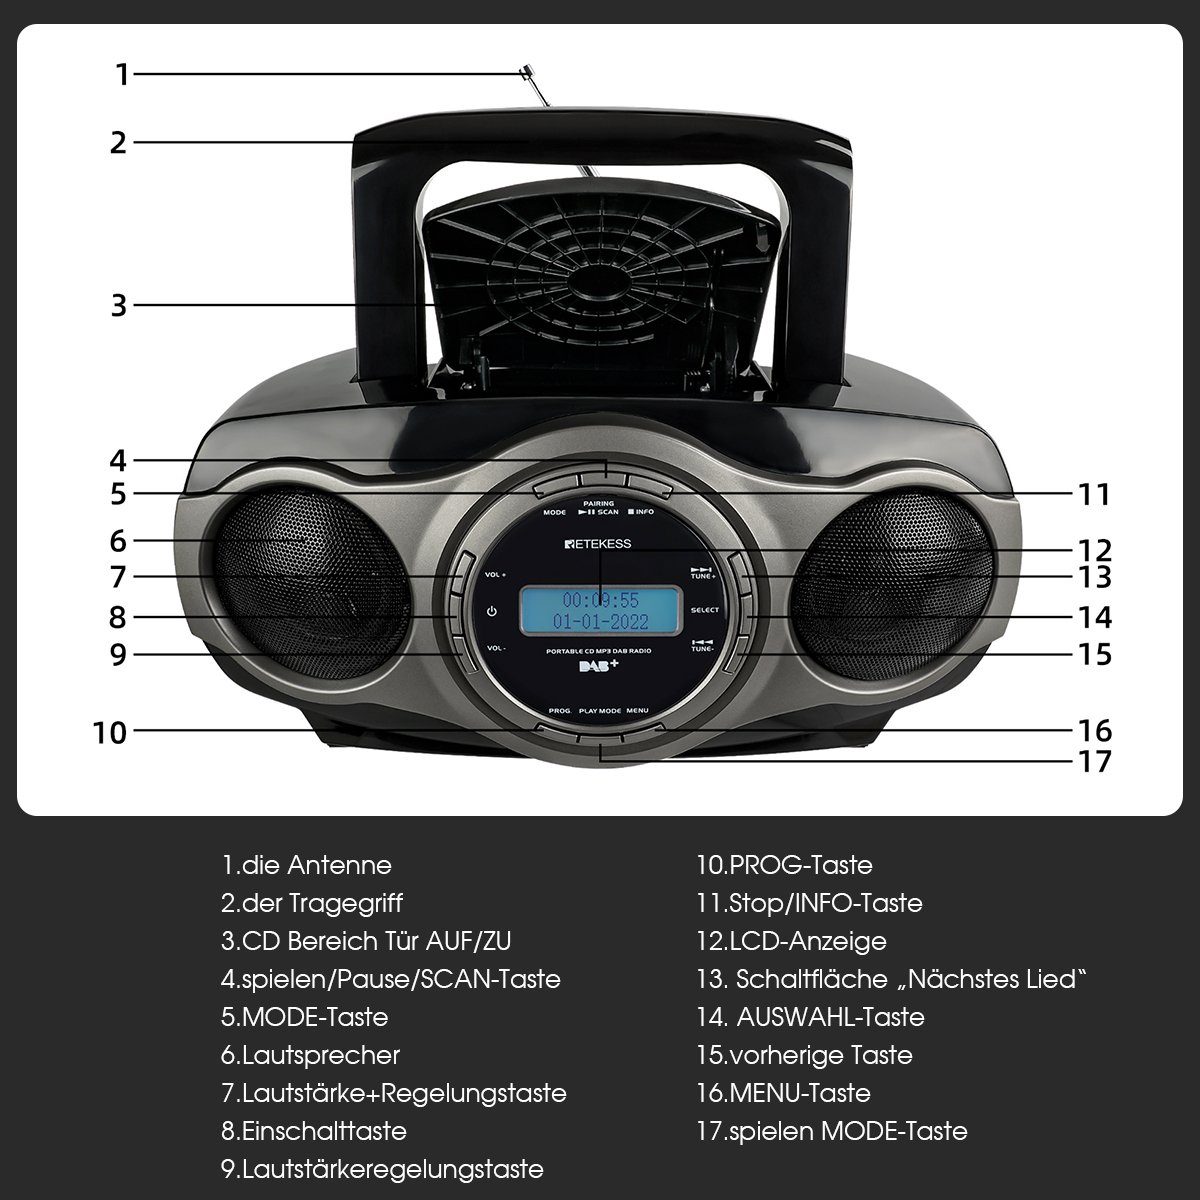 Radio Retekess CD-Radiorecorder FM-Stereo, DAB MP3 CD-Player Bluetooth, mit (DAB TR631 FM Player) Radio mit